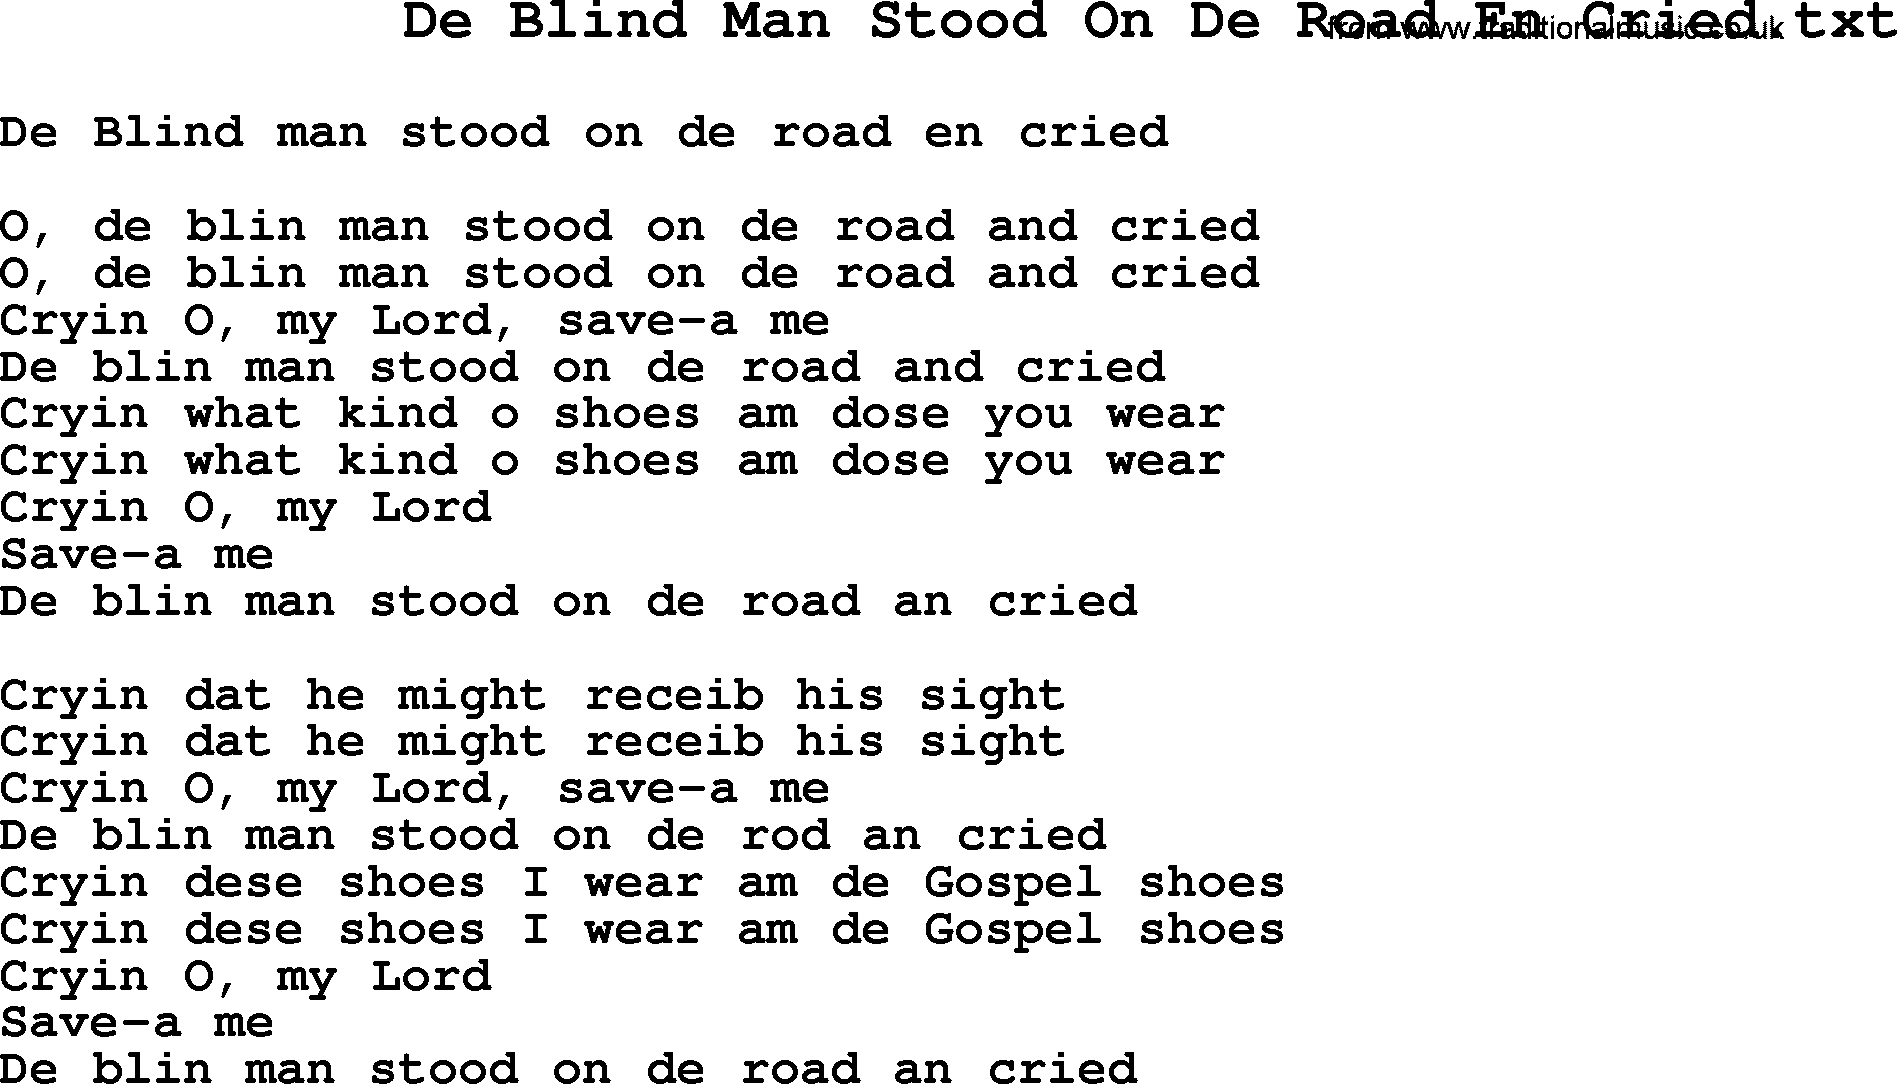 Negro Spiritual Song Lyrics for De Blind Man Stood On De Road En Cried